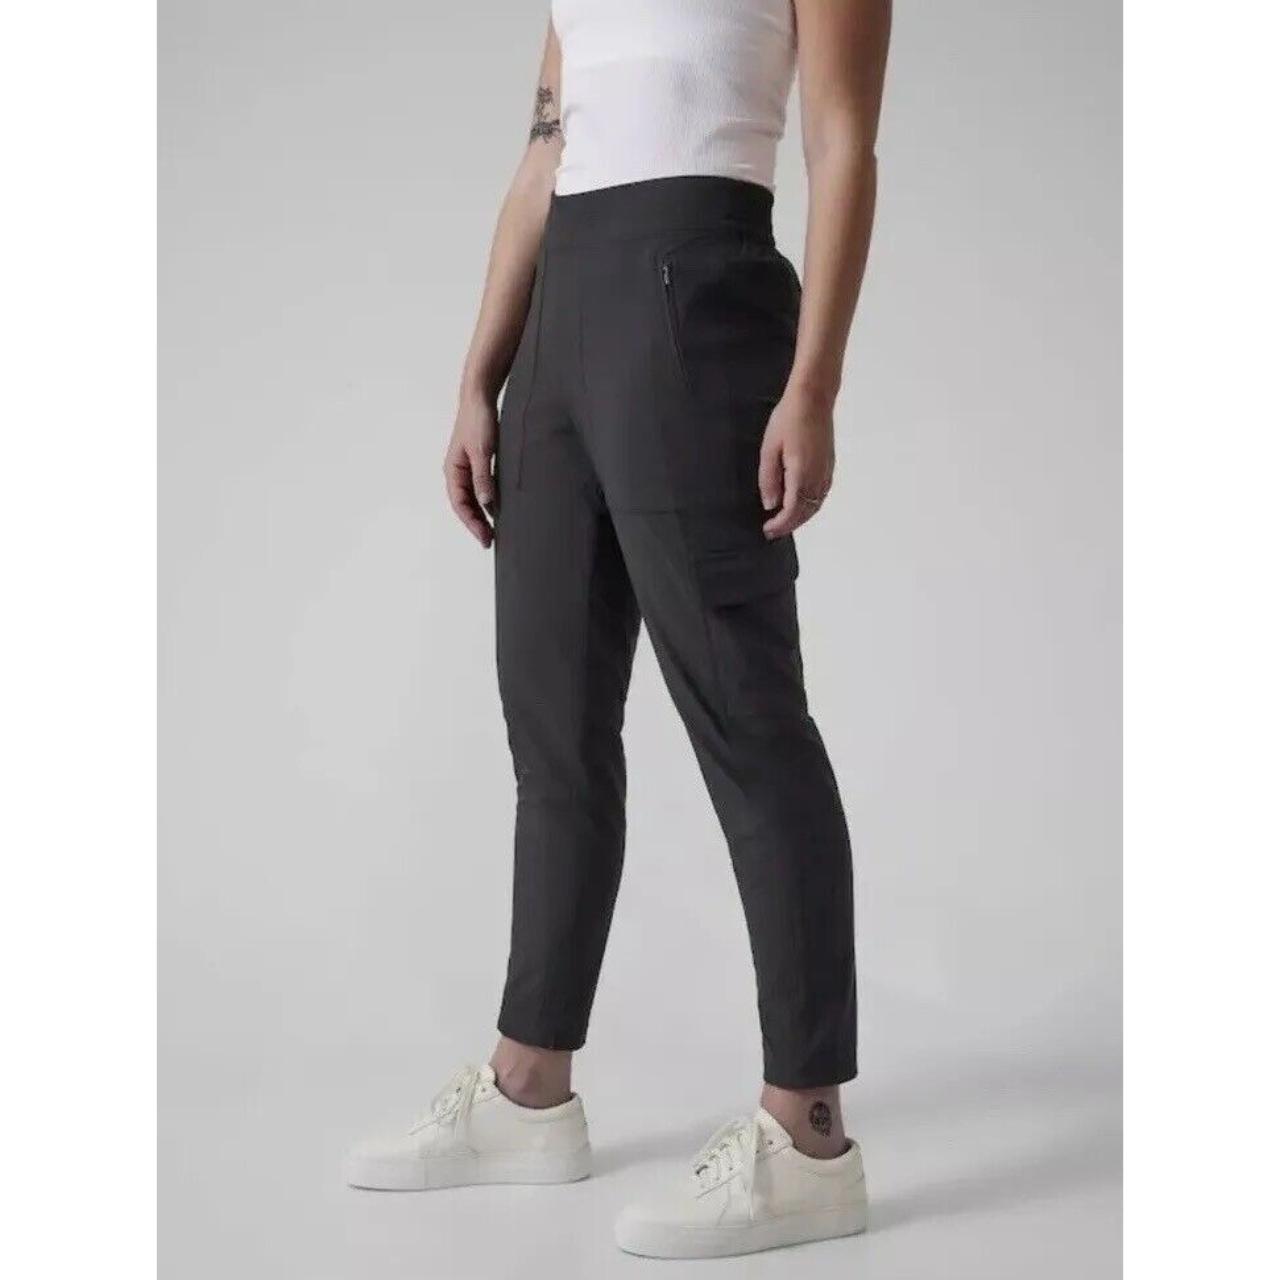 Athletic pants women's 8 black chelsea lined cargo - Depop